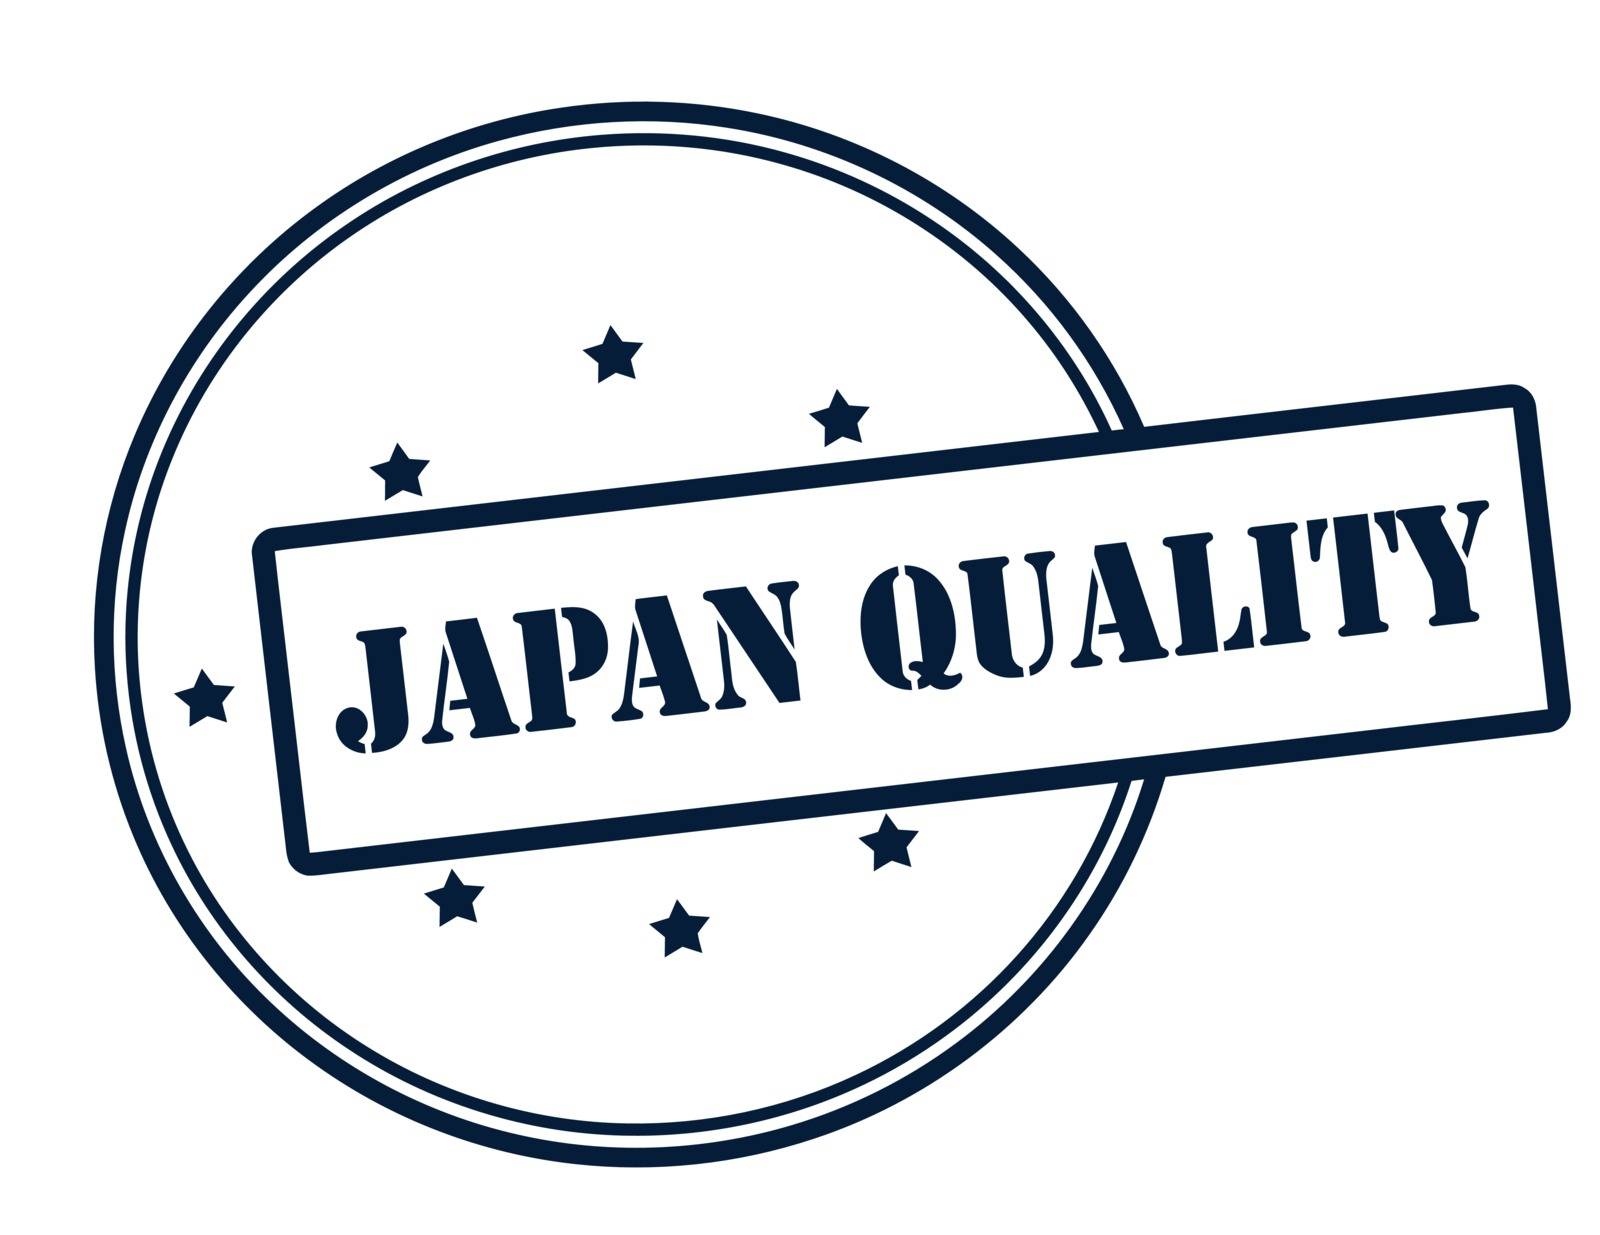 Japan quality by carmenbobo